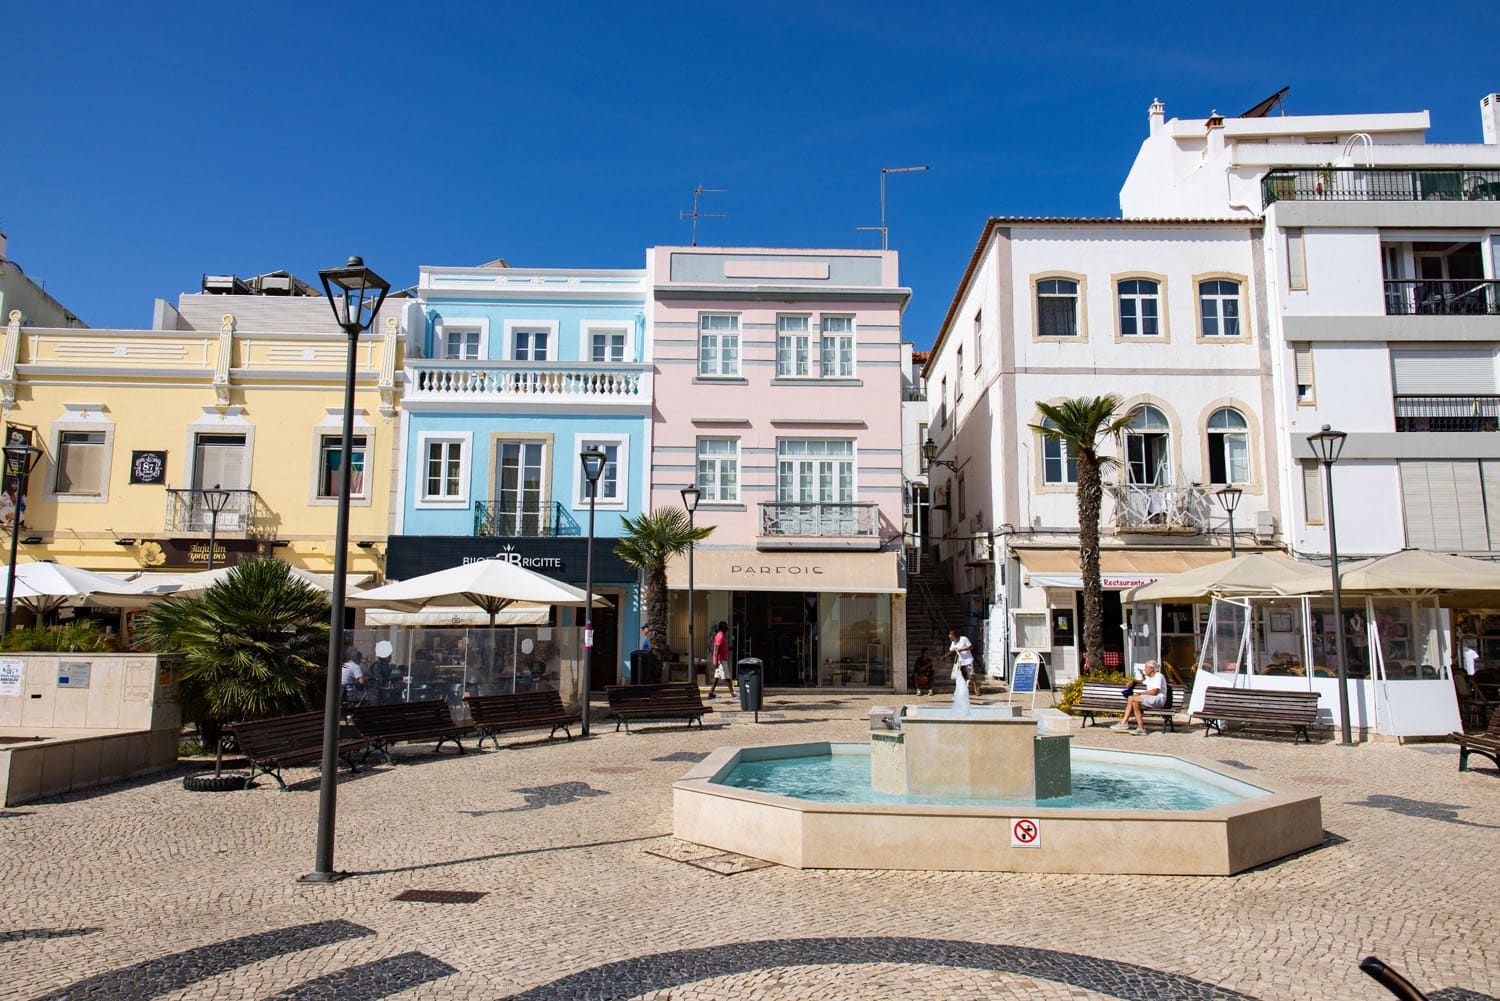 Lagos Portugal | Algarve Itinerary